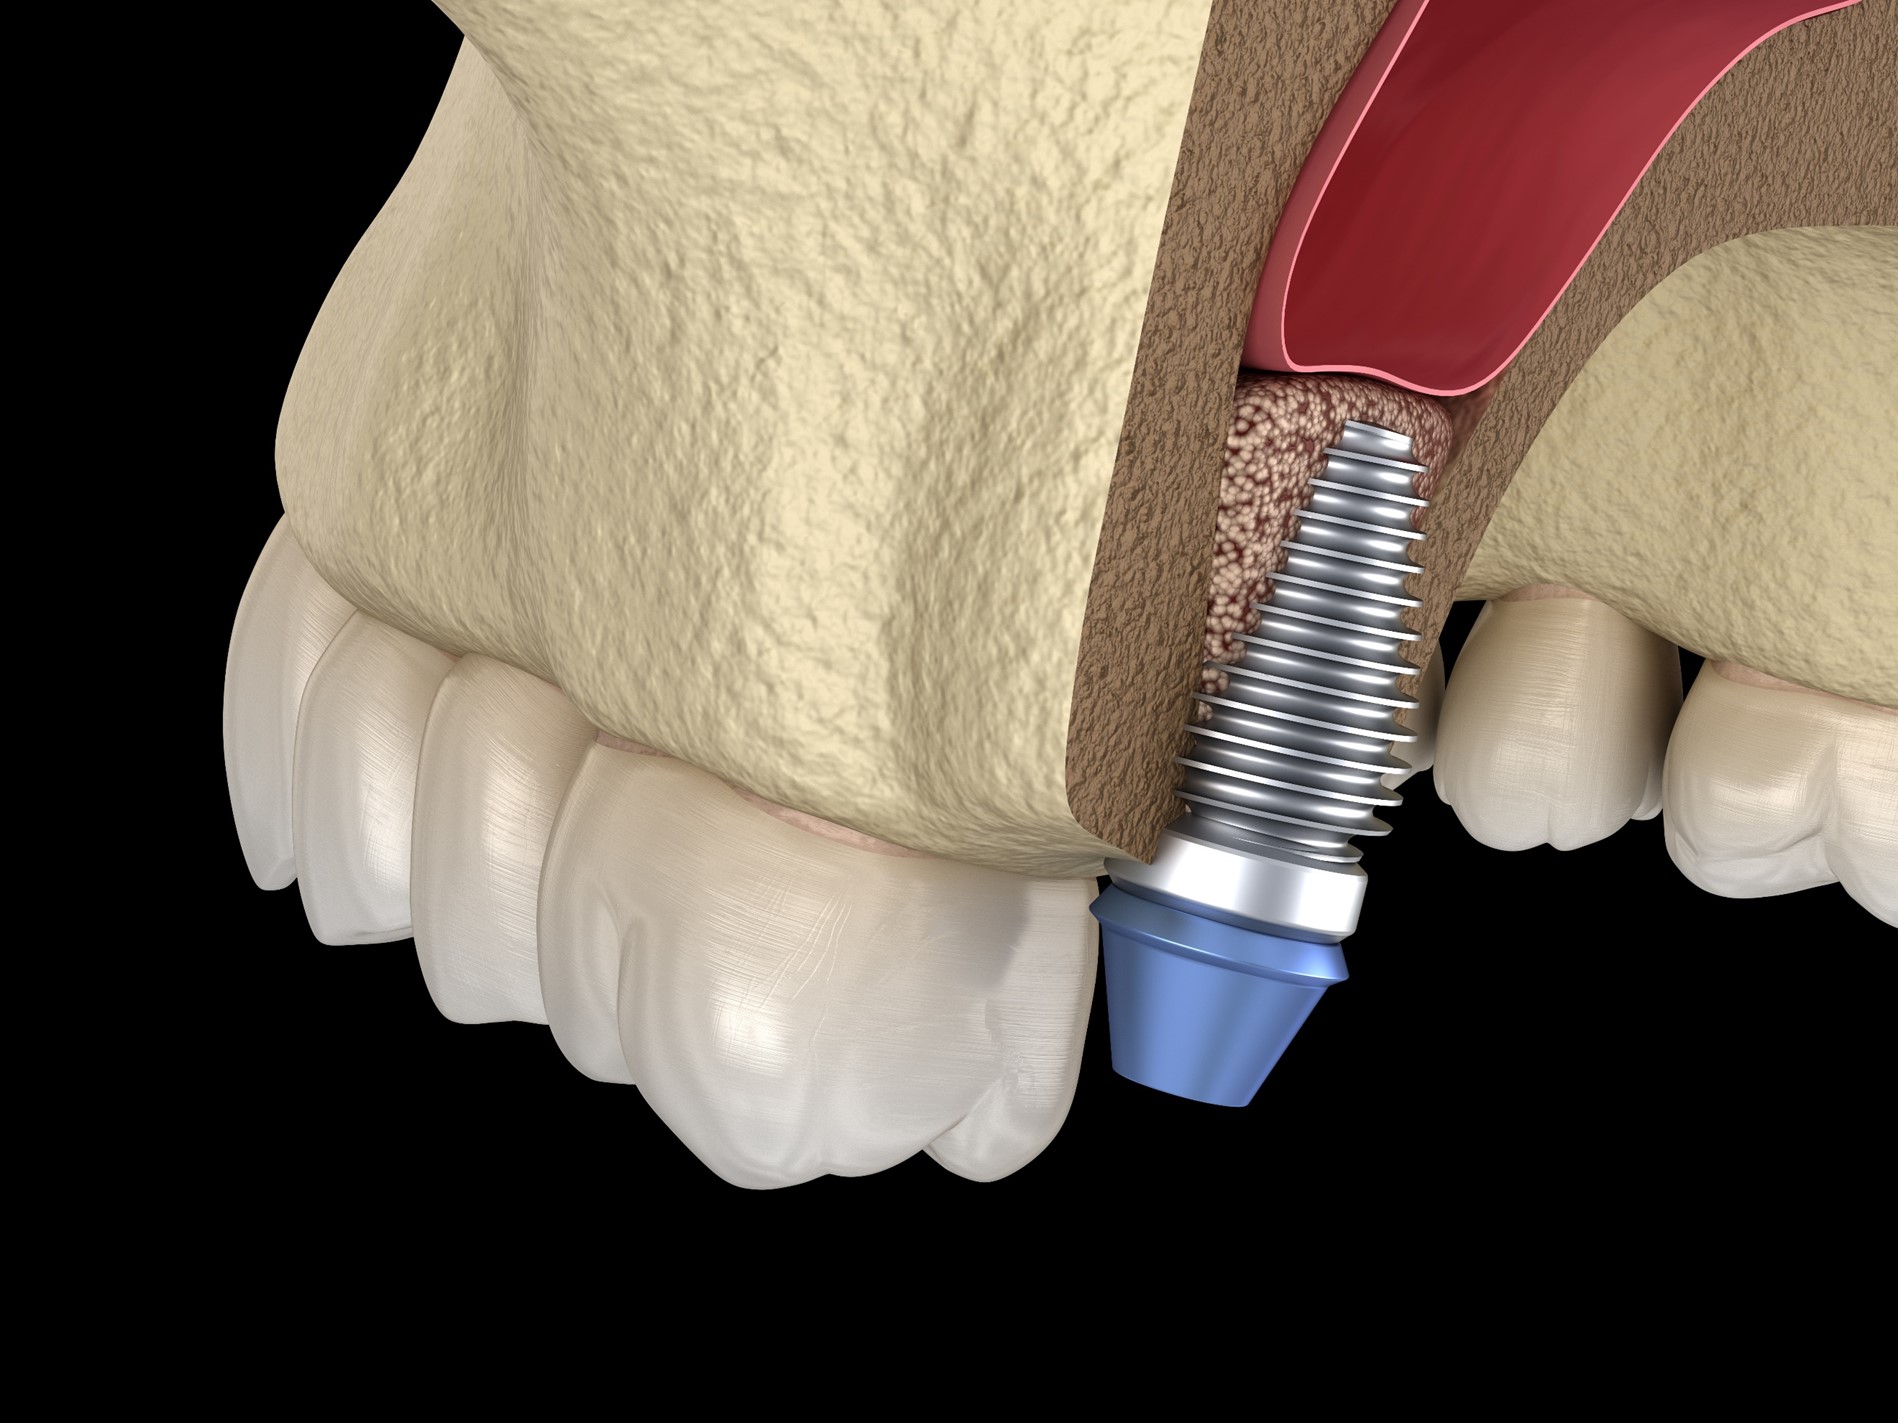 Dental Implant Bone Graft  Bone Grafting for Dental Implant